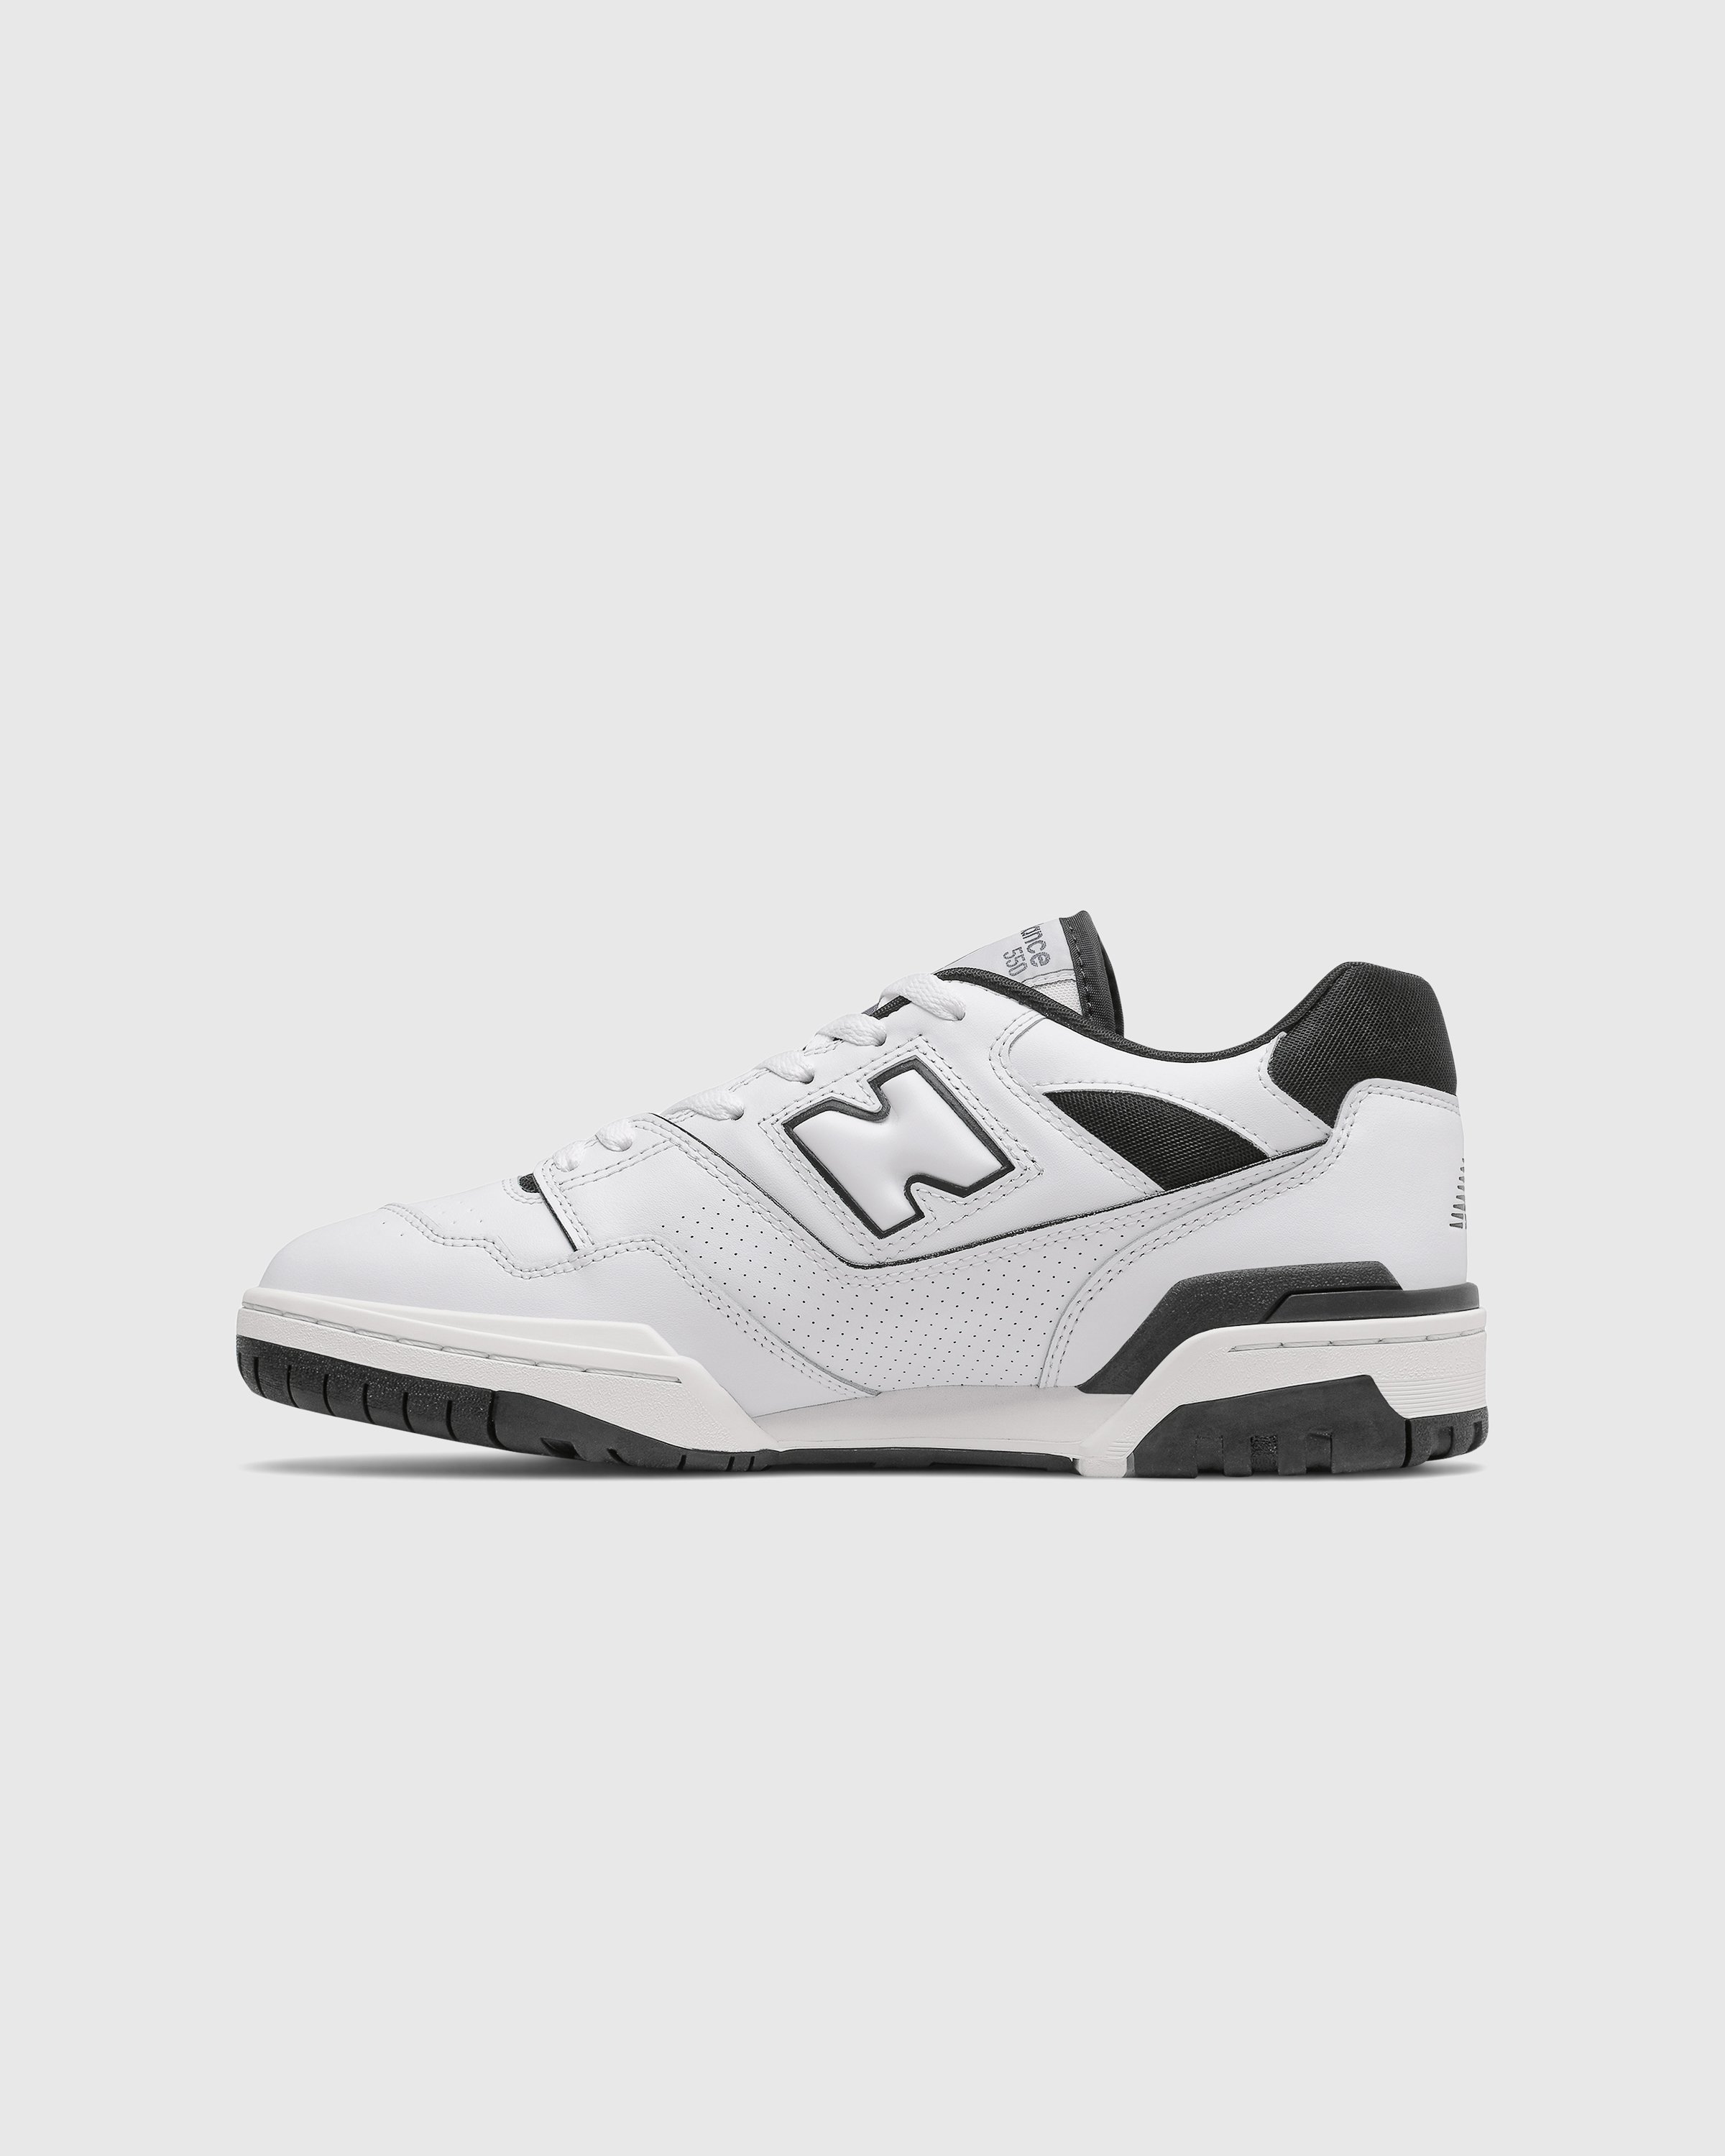 New Balance - BB550HA1 WHITE - Footwear - White - Image 2